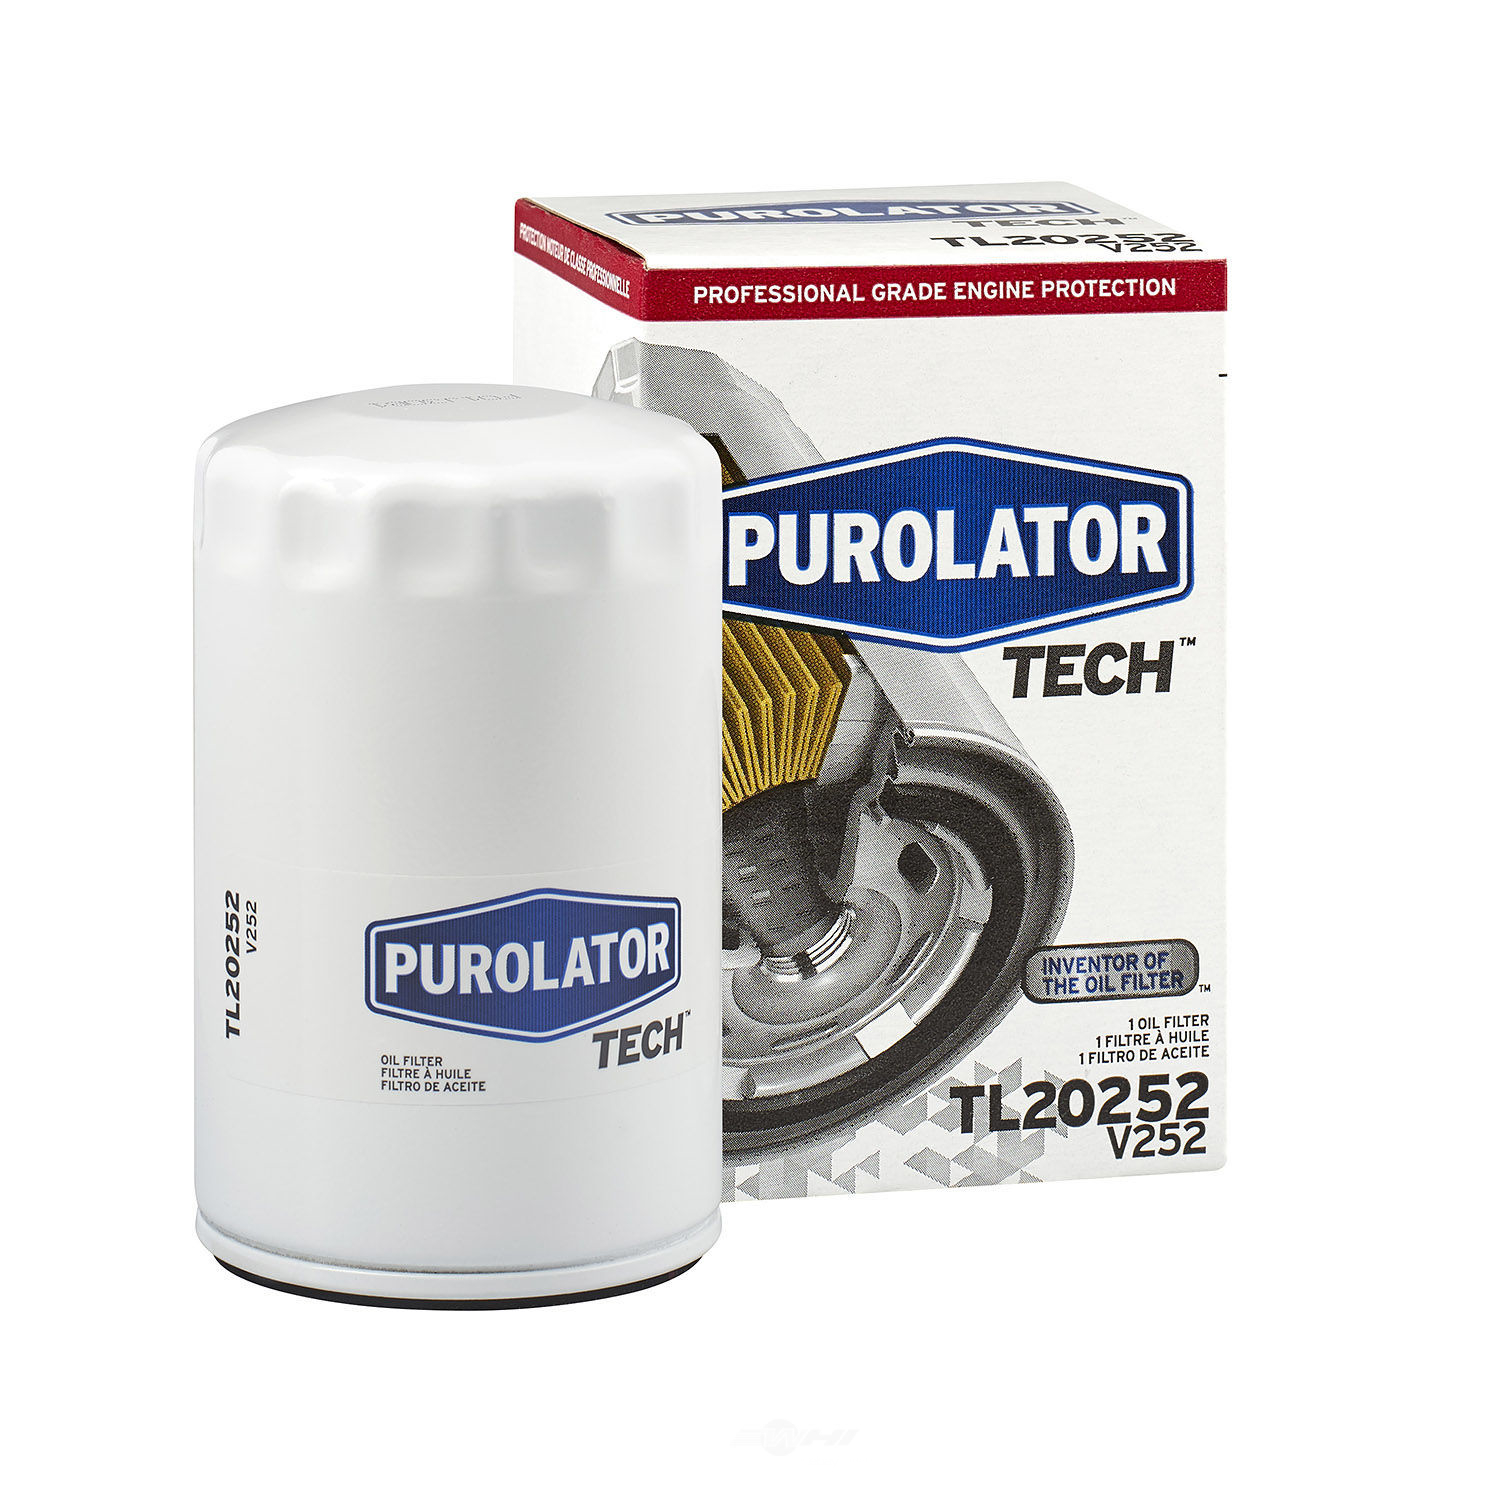 PUROLATOR - Purolator TECH - Professional Use - PUR TL20252